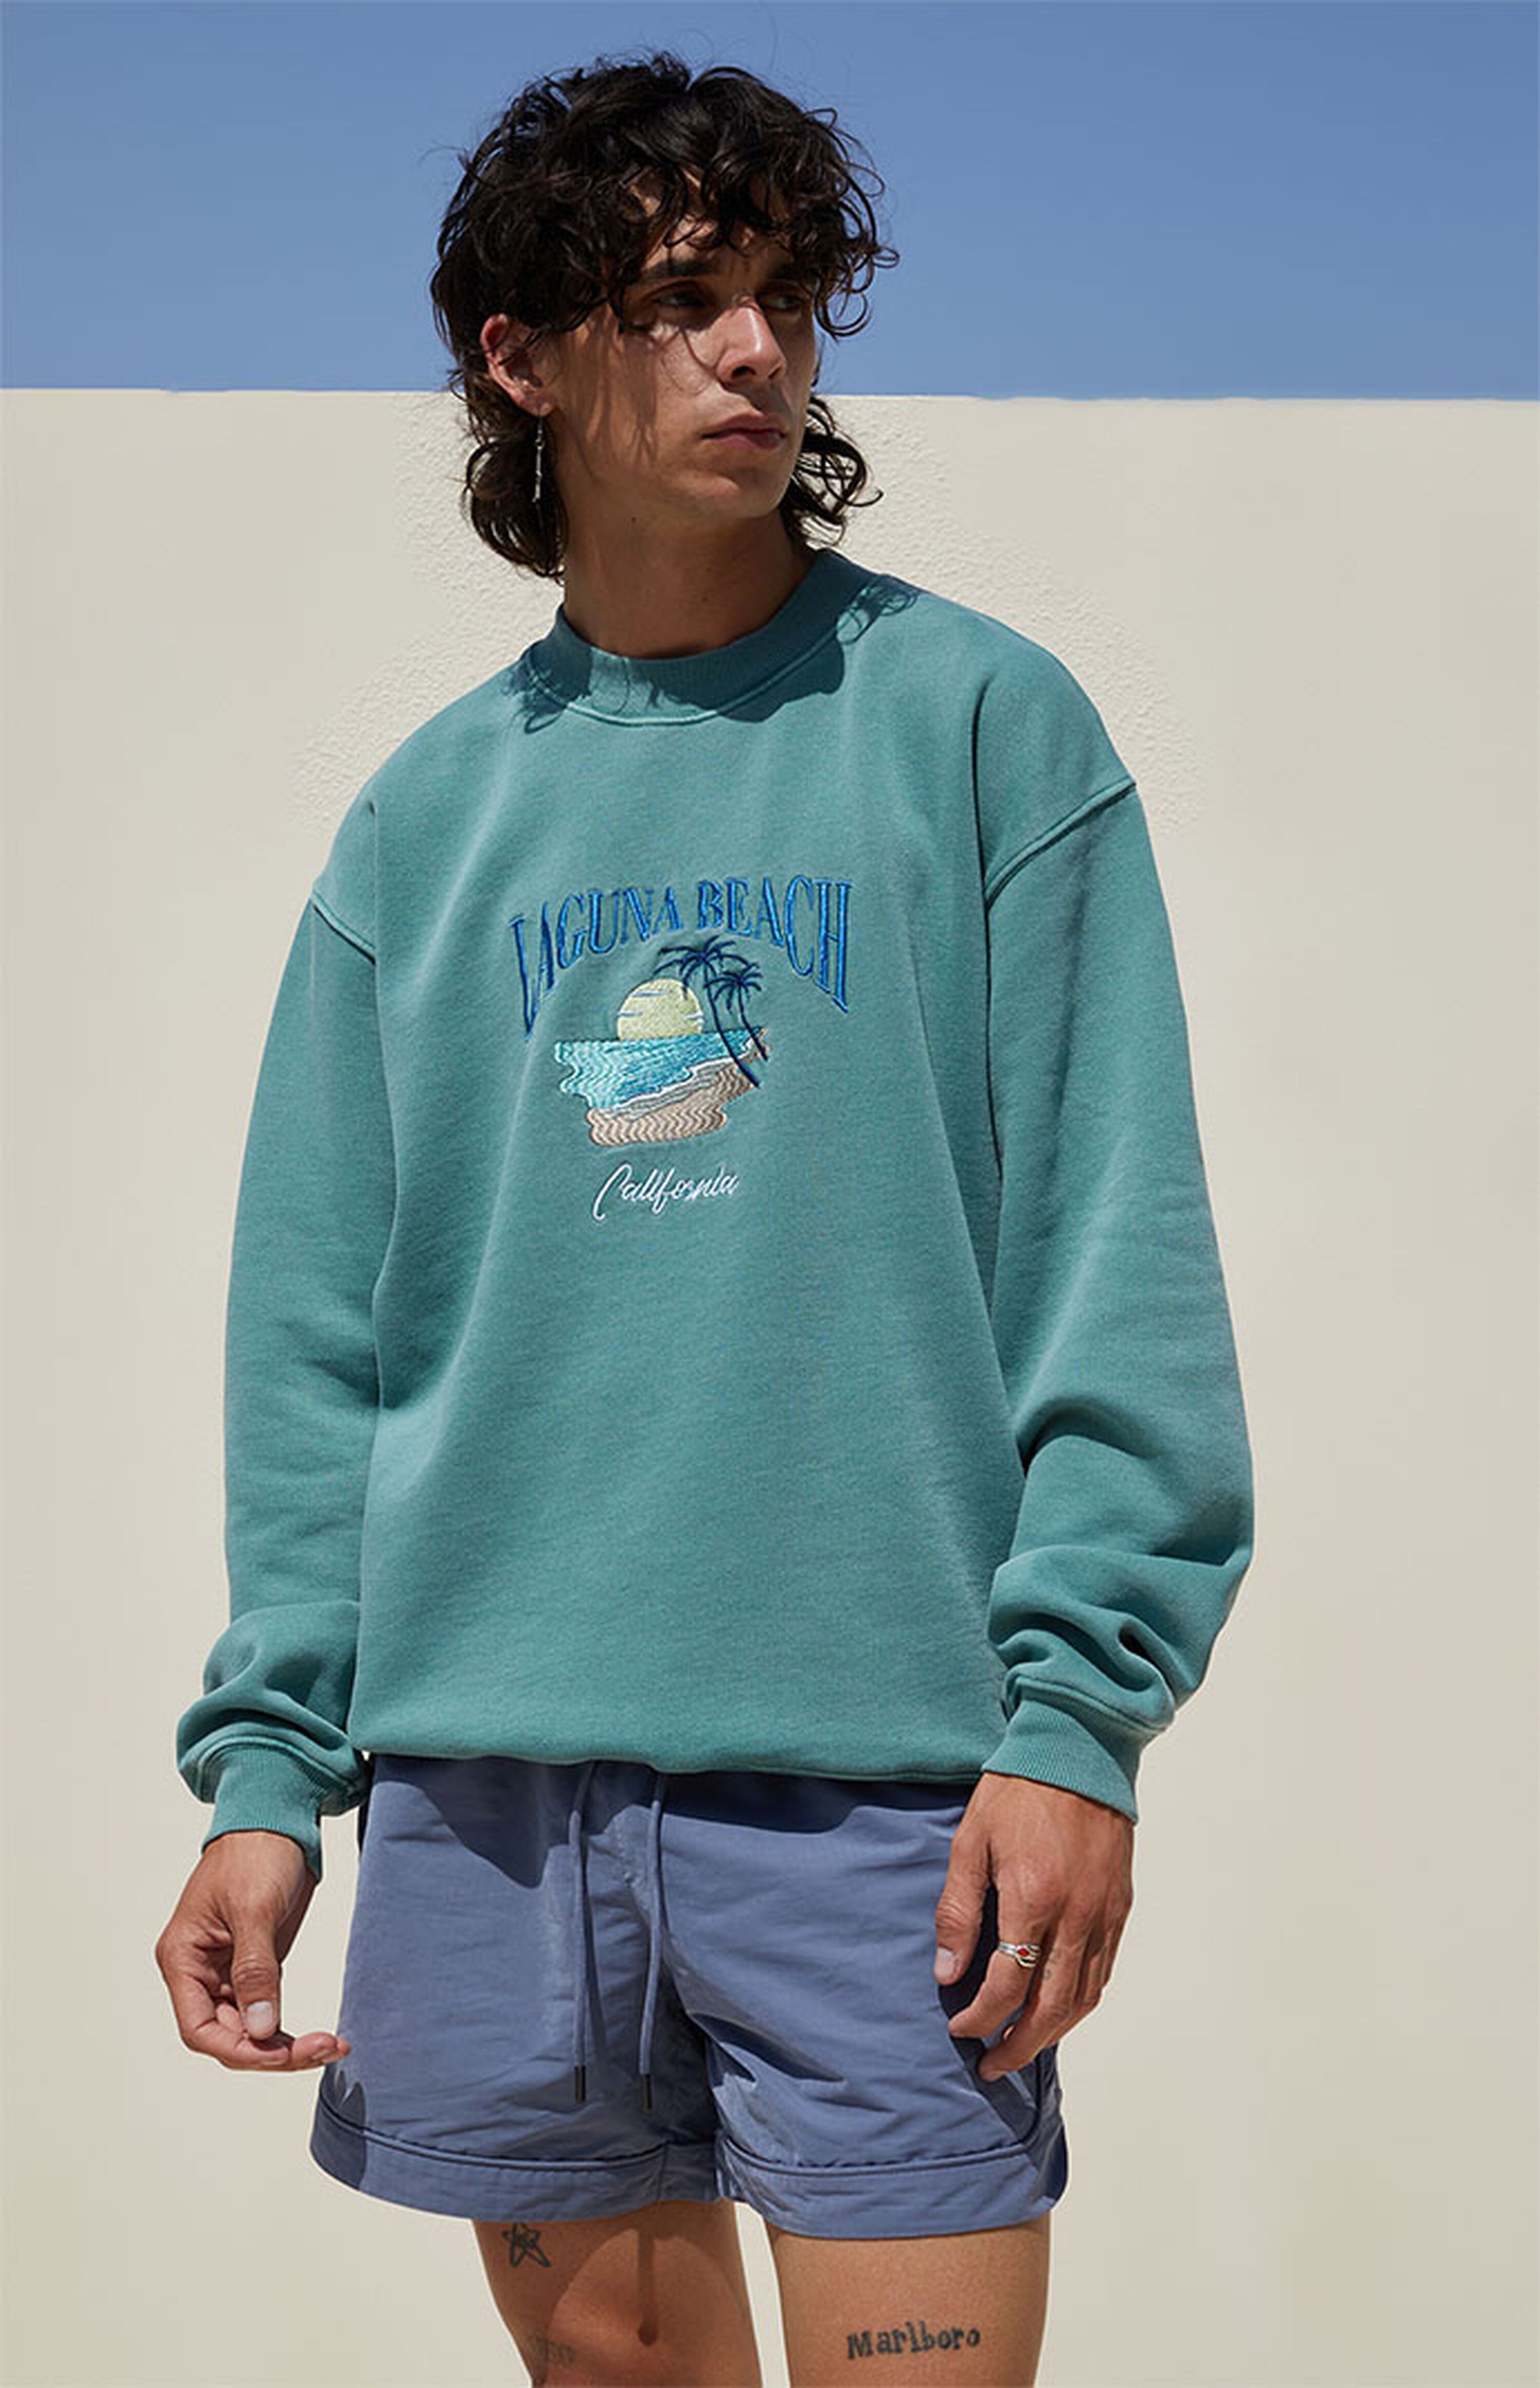 PacSun Laguna Beach Vintage Crew Neck Sweatshirt | PacSun